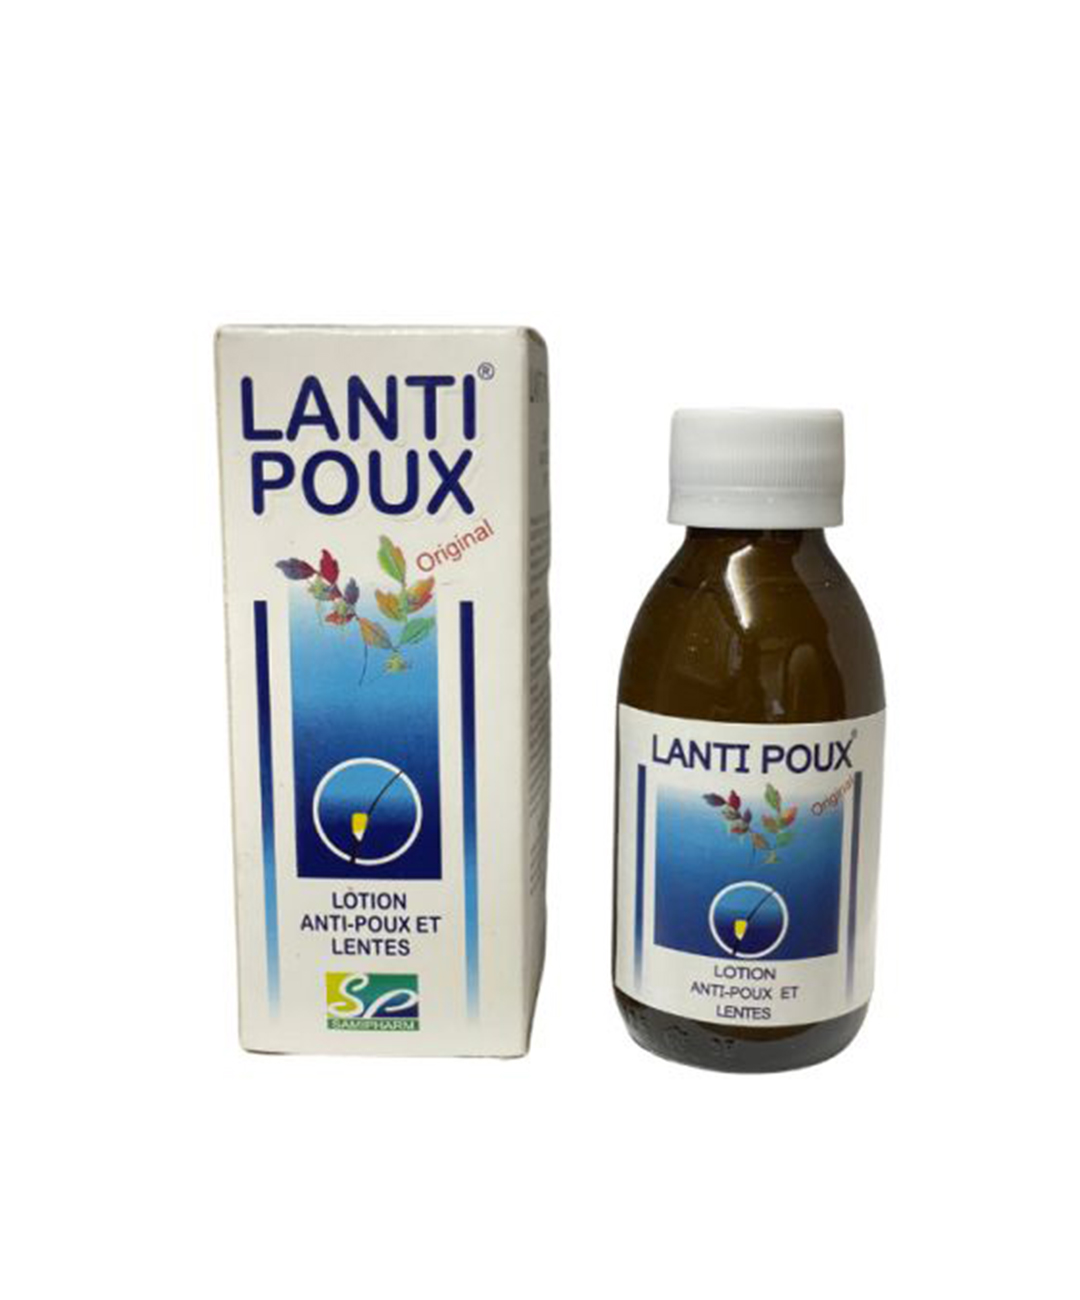 LANTI POUX Lotion Anti-Poux et Lentes 125ML - Citymall